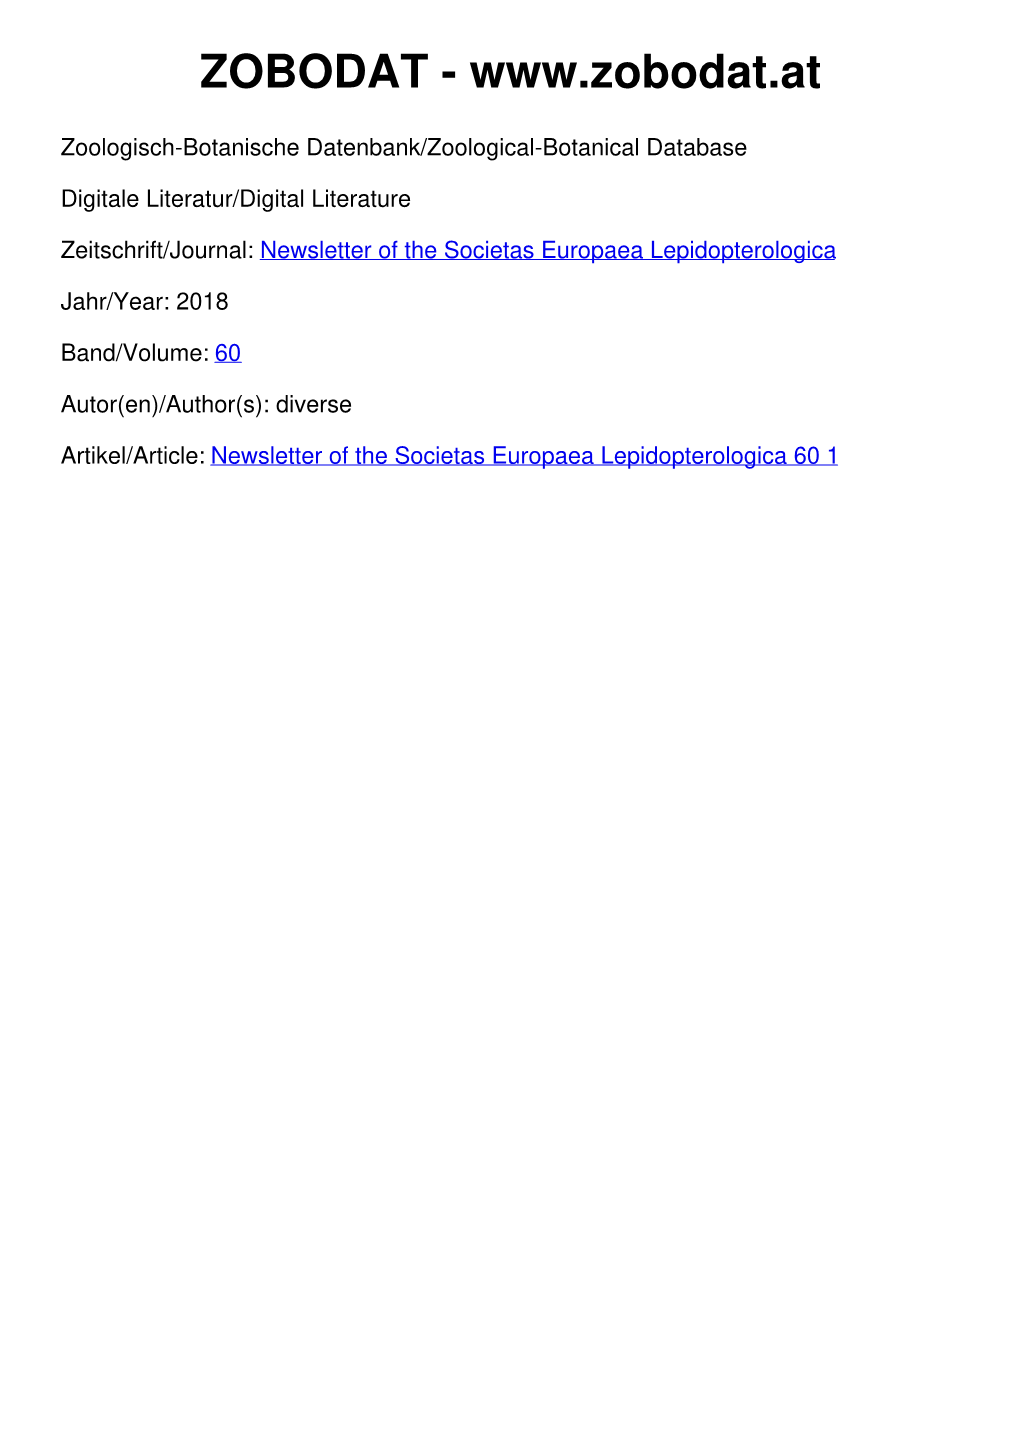 Societas Europaea Lepidopterologica